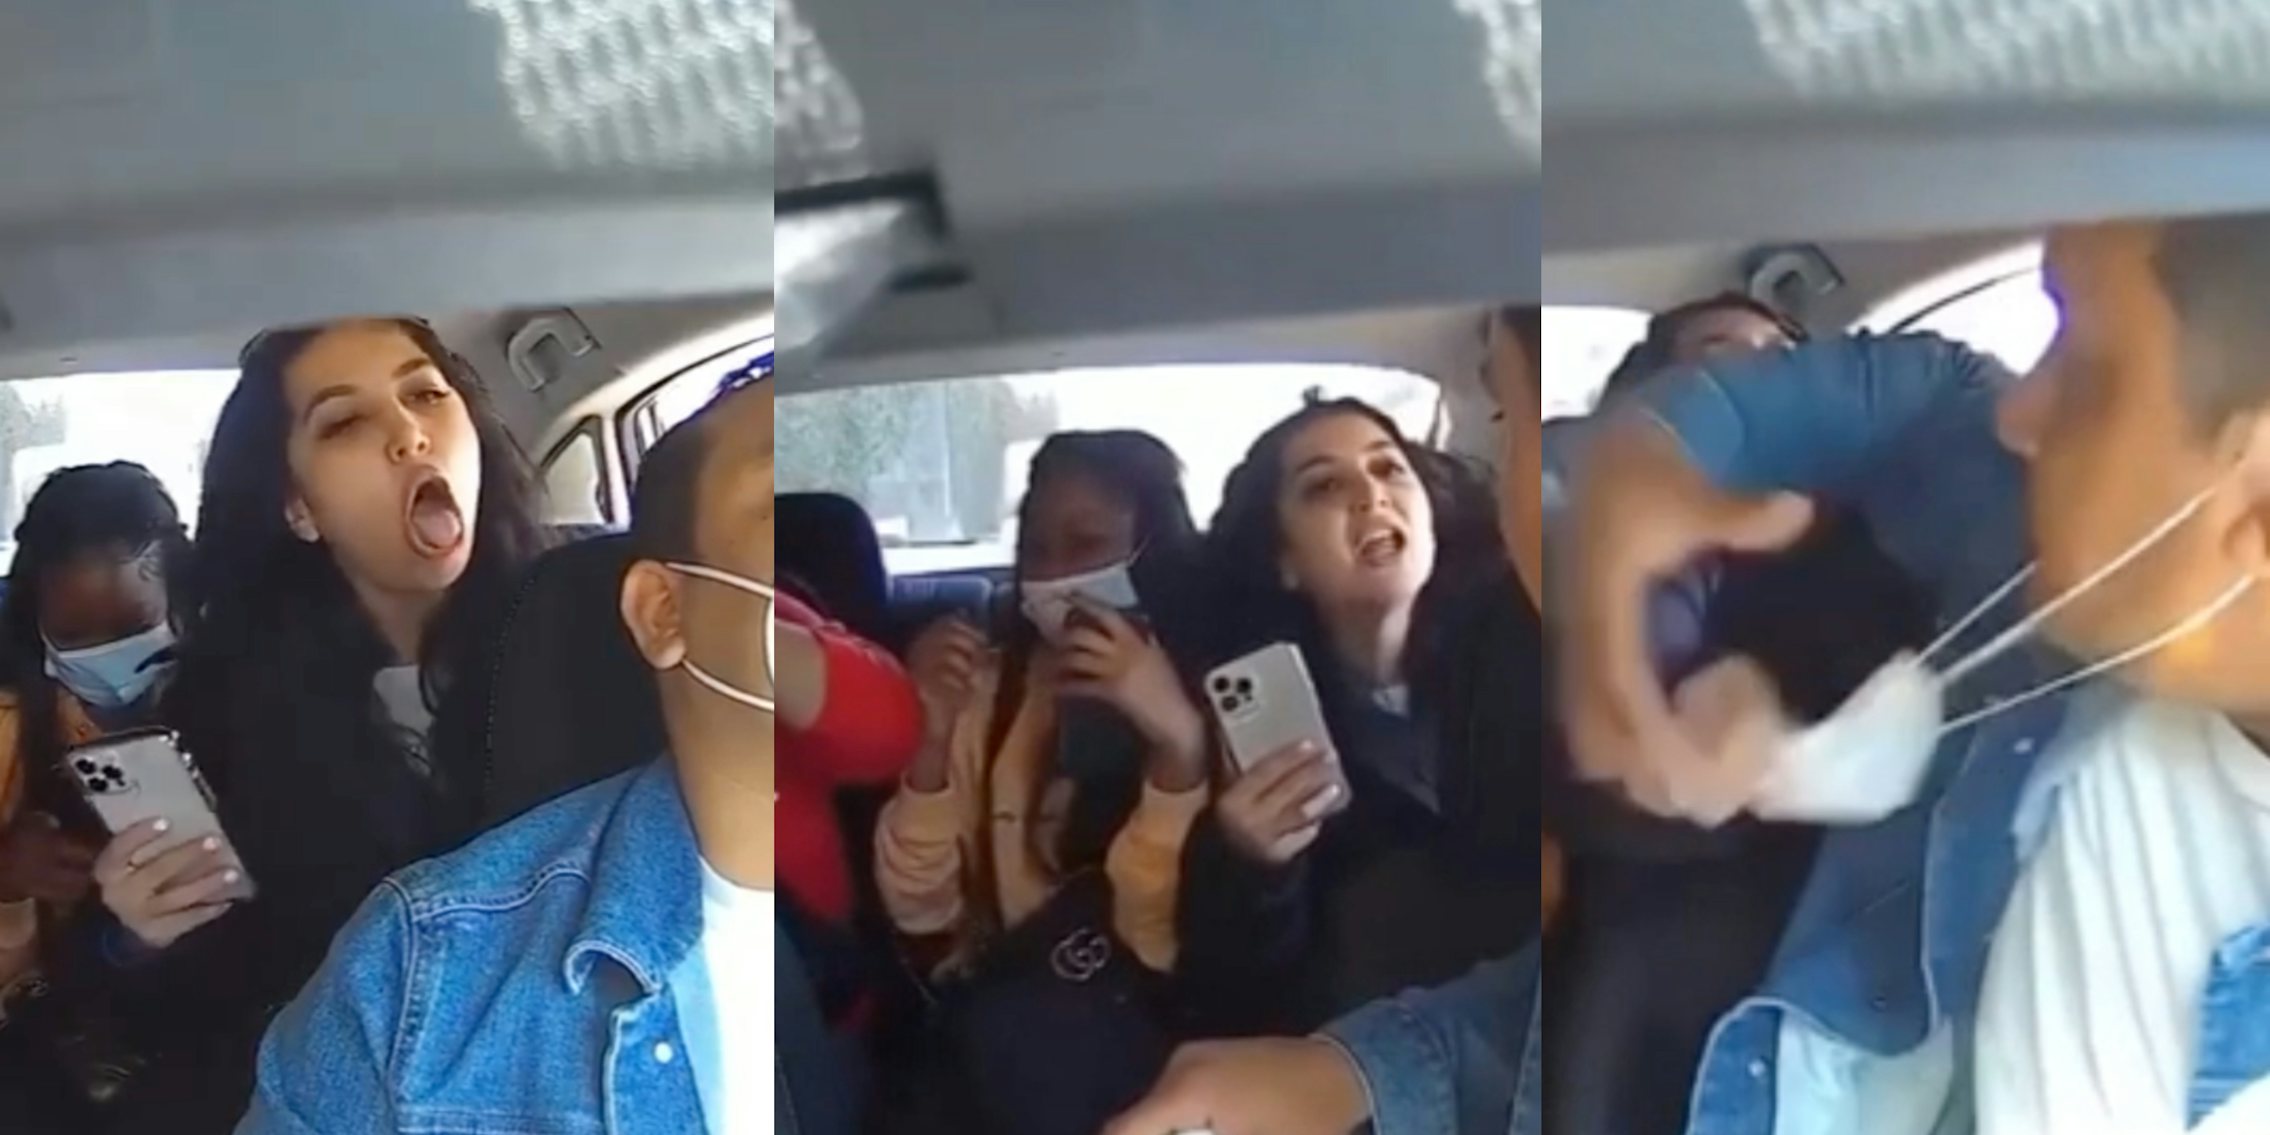 Uber driver harassed by three anti-mask female passengers